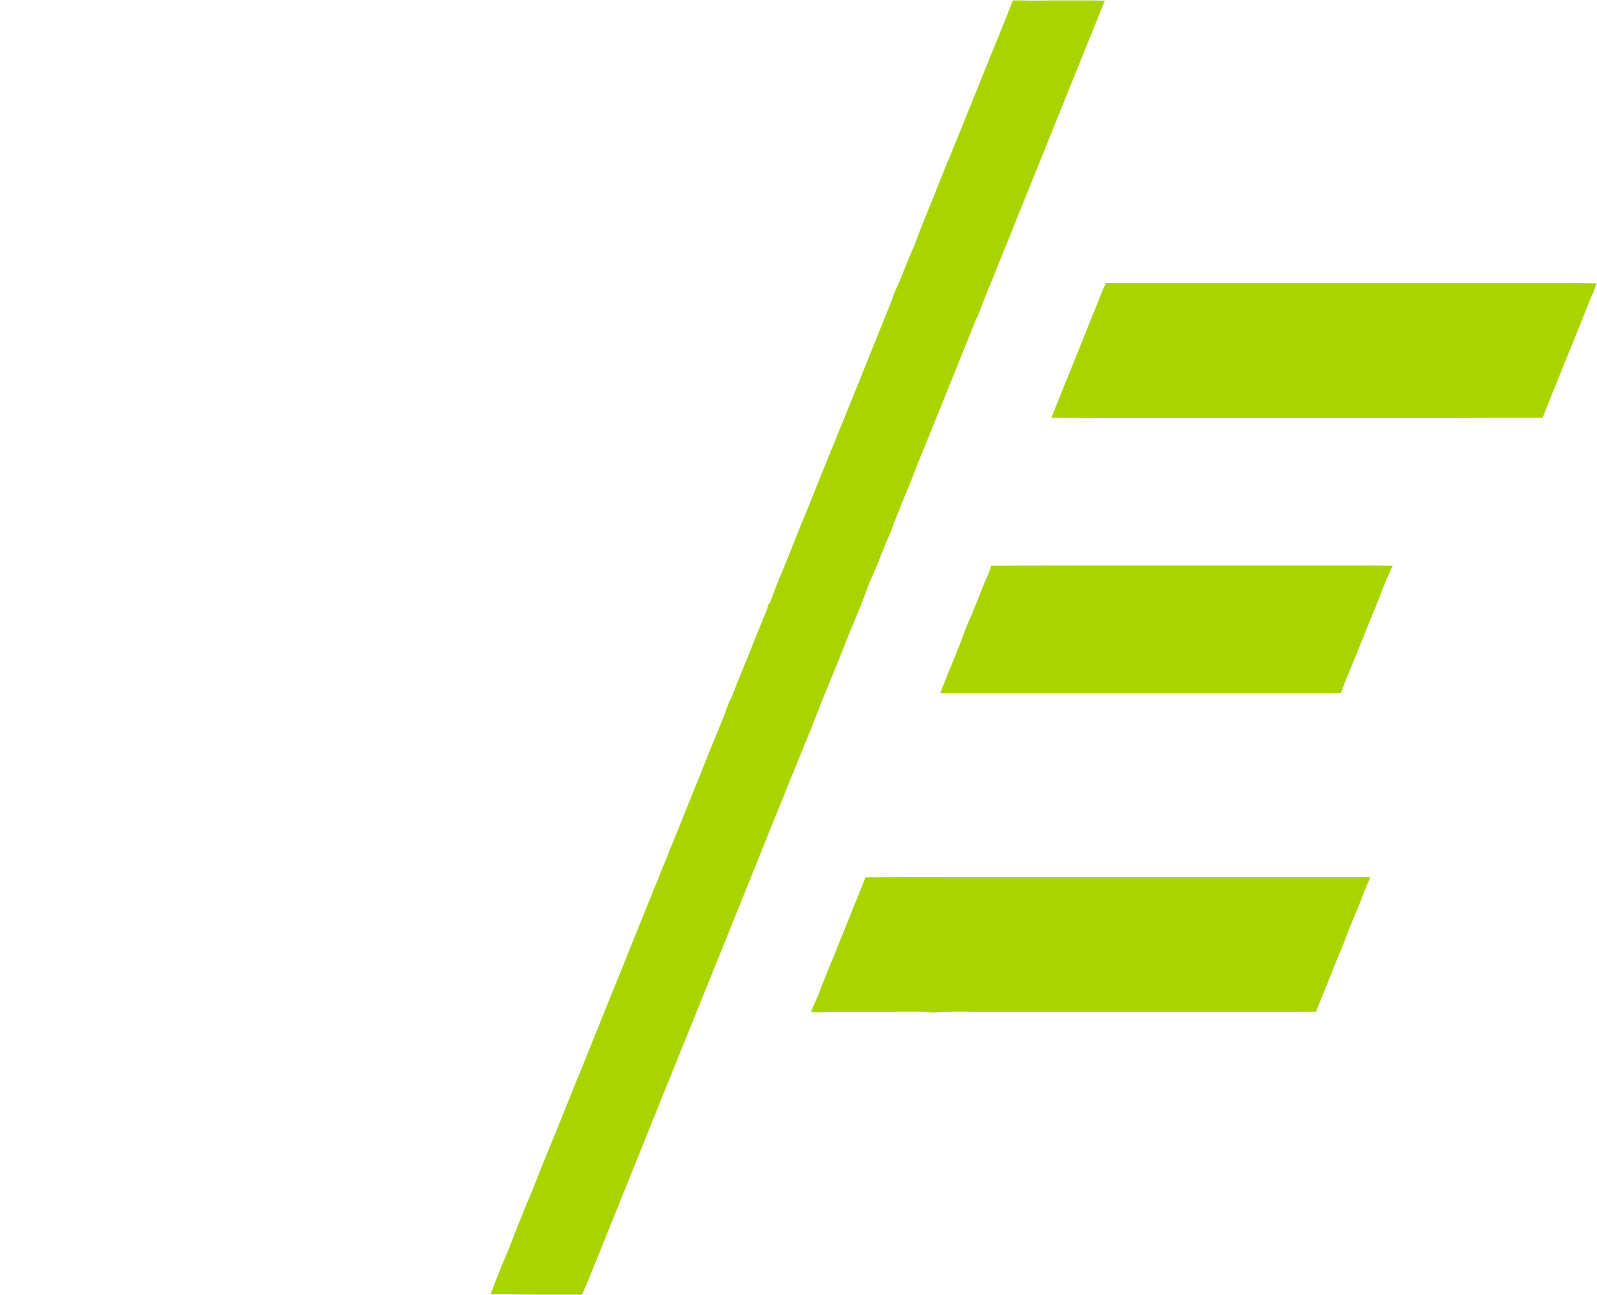 5E Advanced Materials logo pour fonds sombres (PNG transparent)